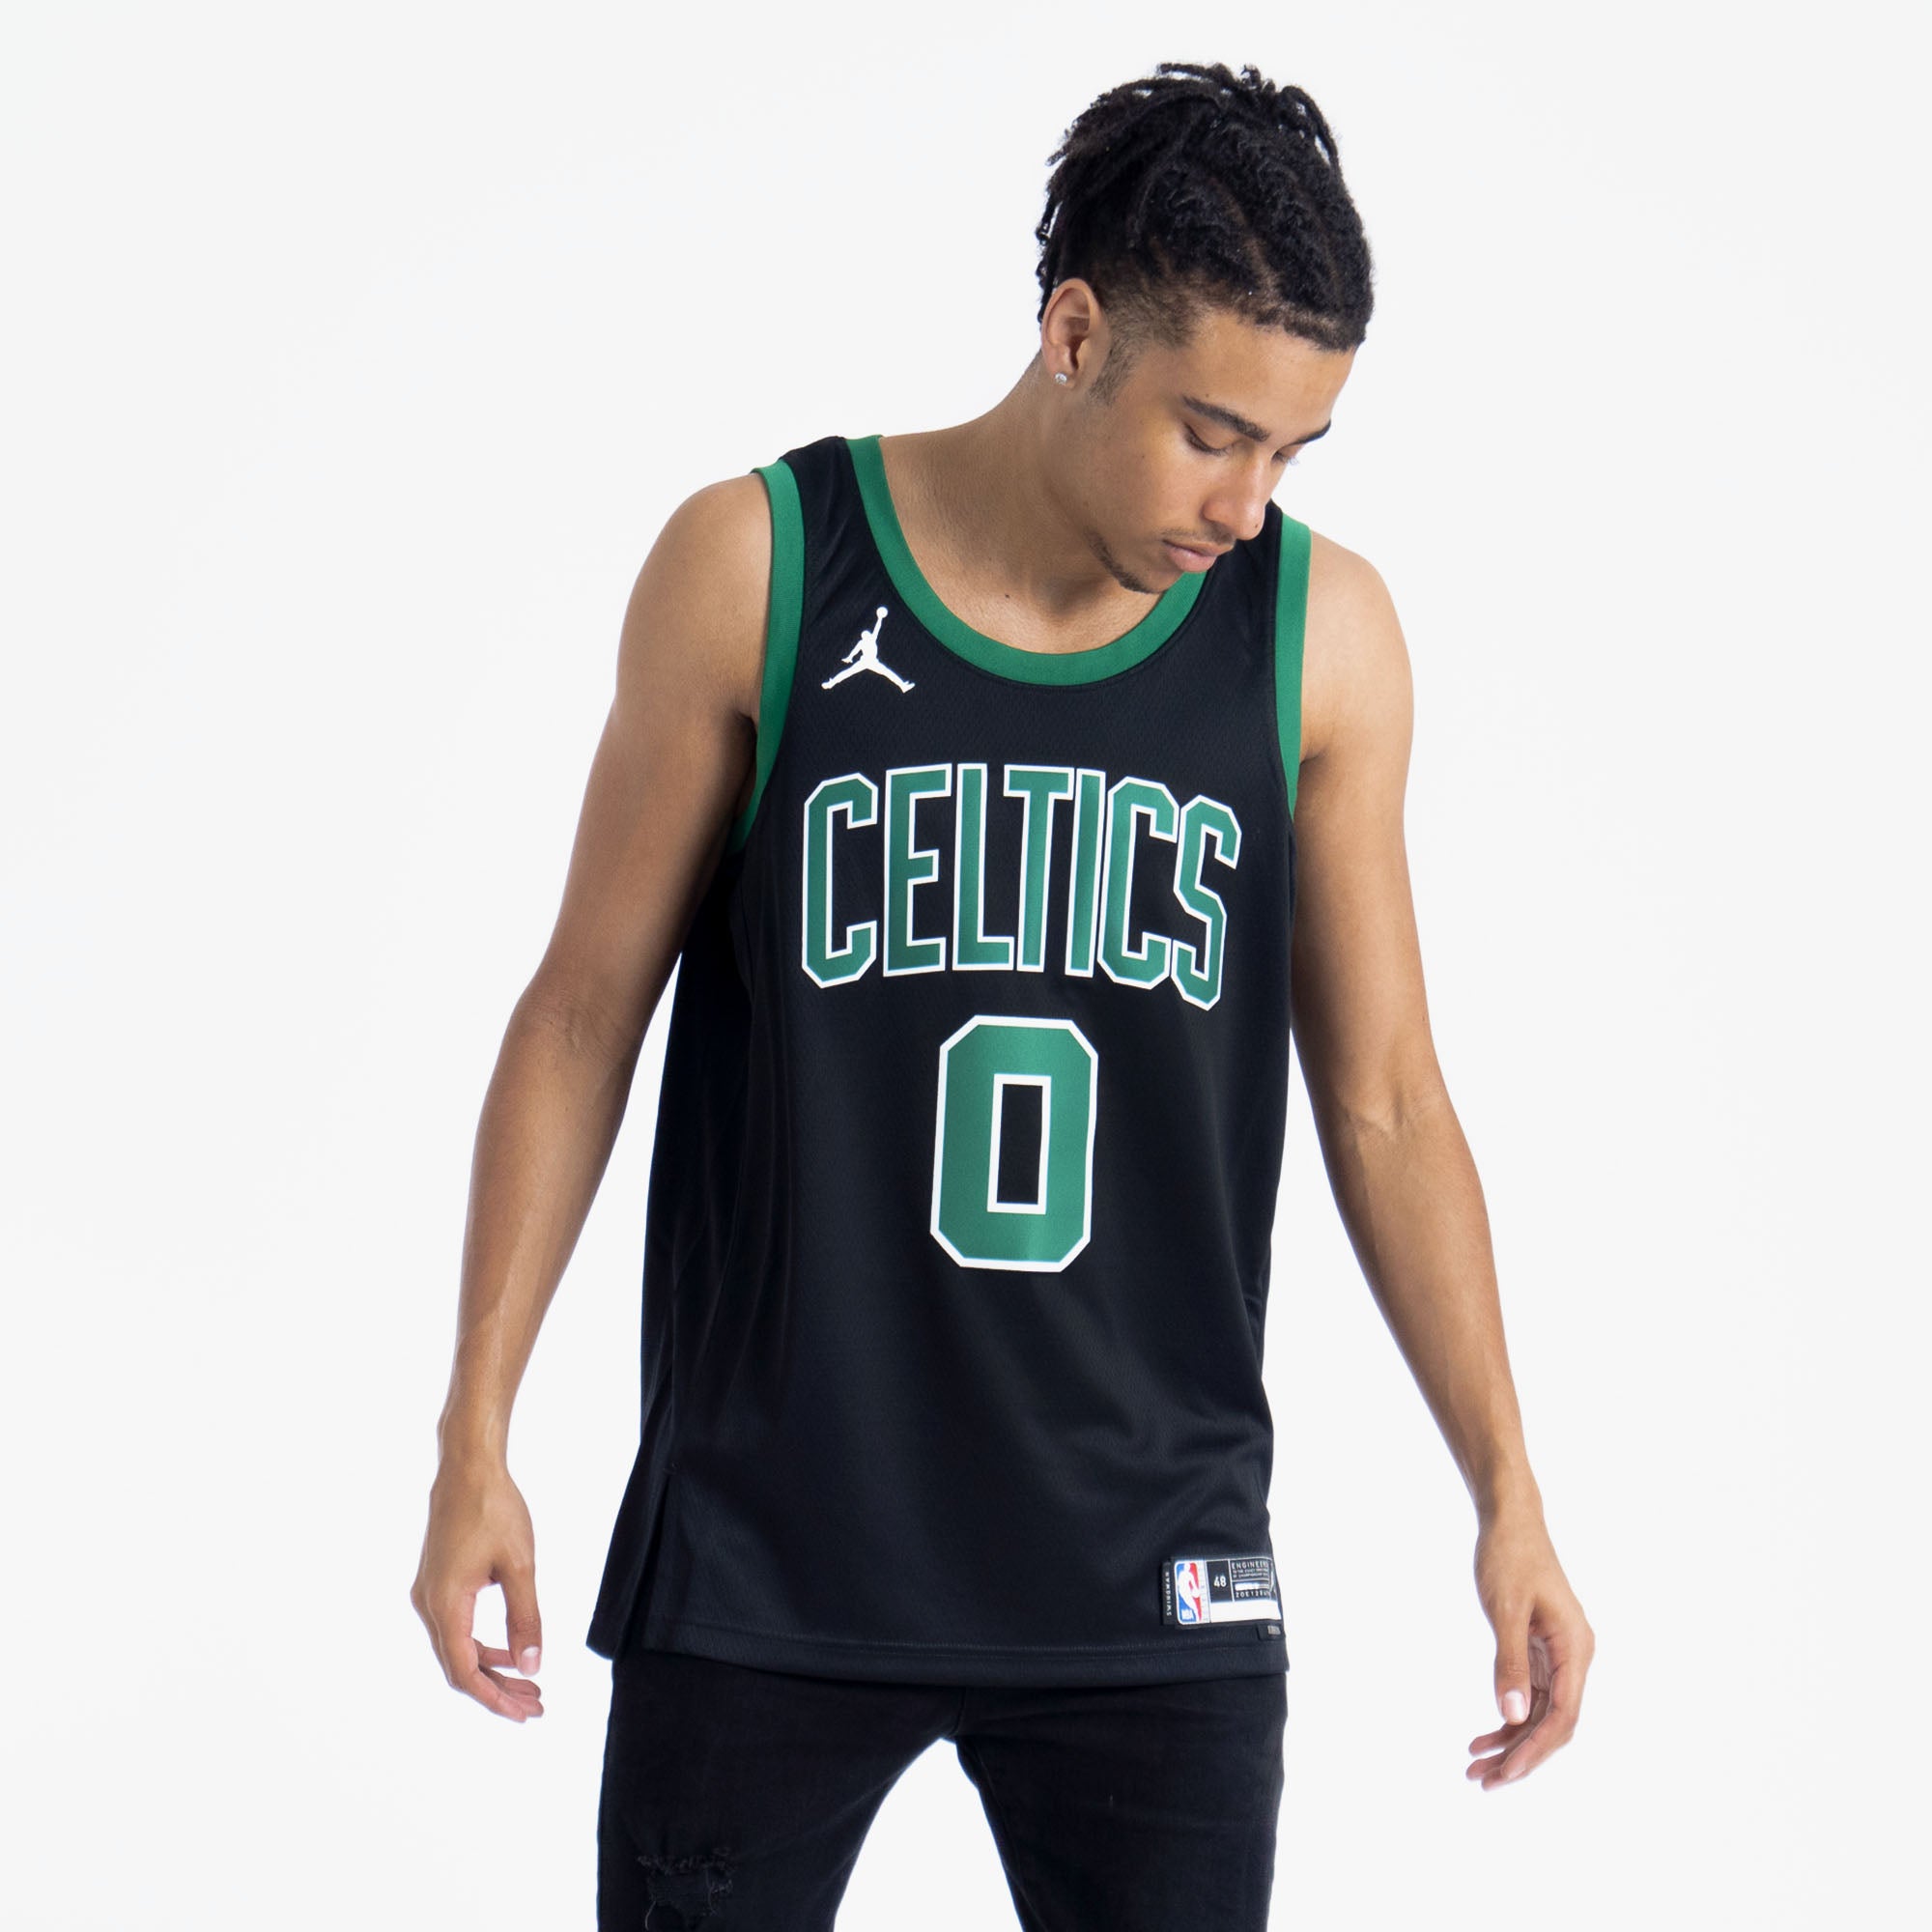 Boston Celtics Jordan Statement Edition Swingman Jersey 22 - Green - Jayson  Tatum - Youth